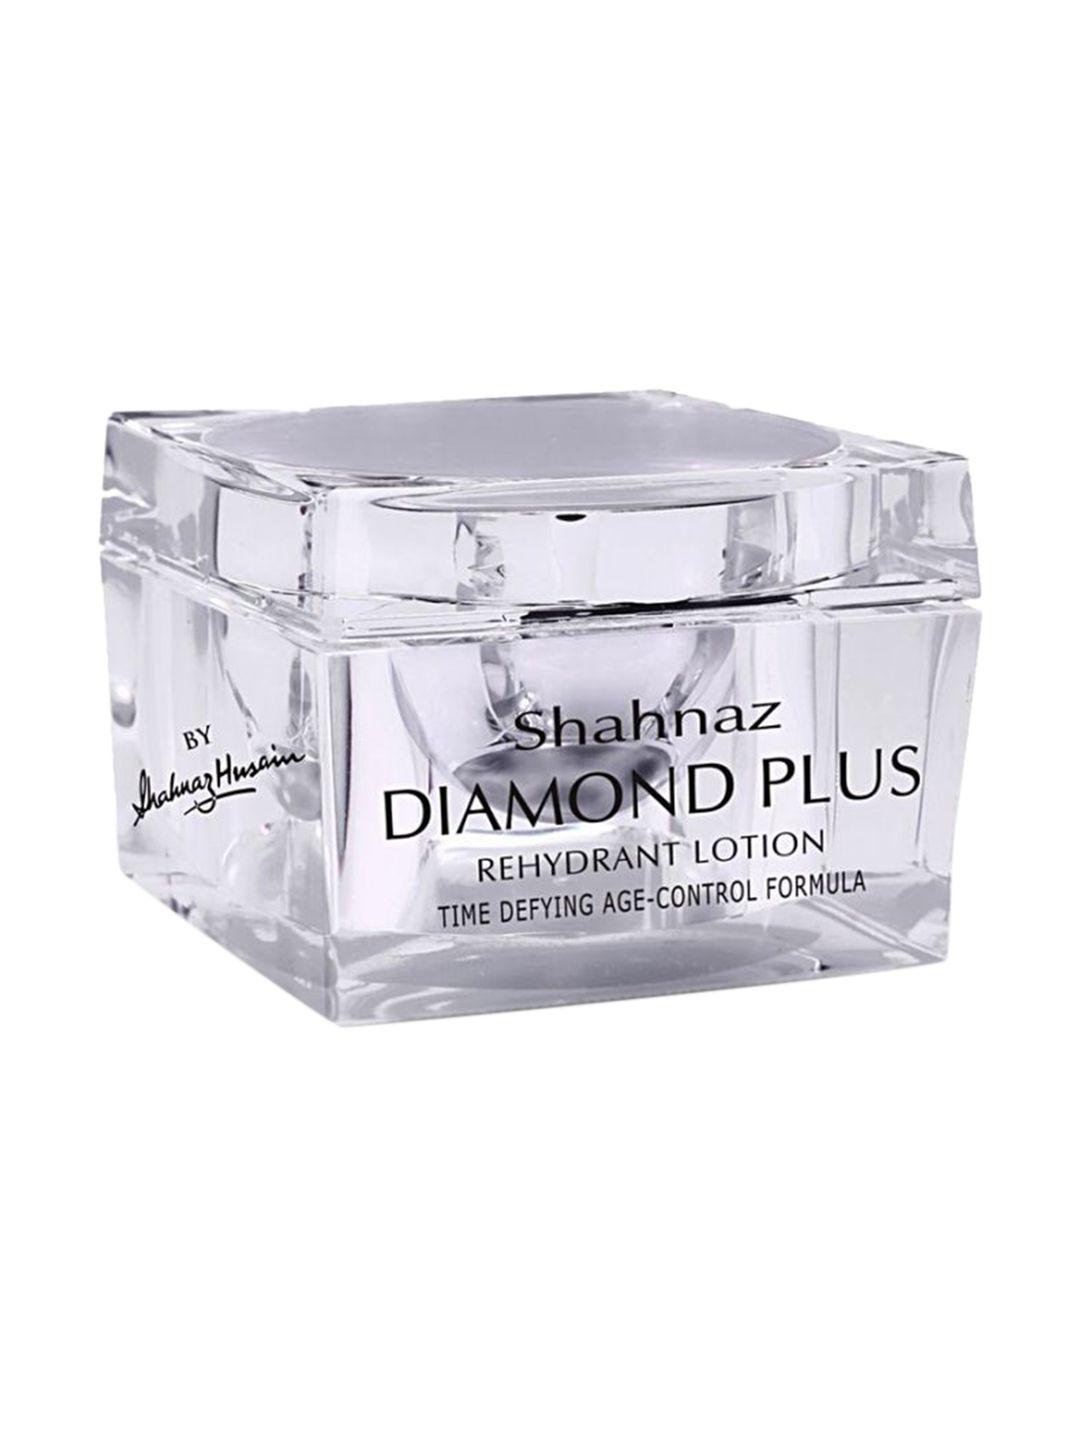 shahnaz husain time defying age-control formula diamond plus rehydrant lotion 40 gm